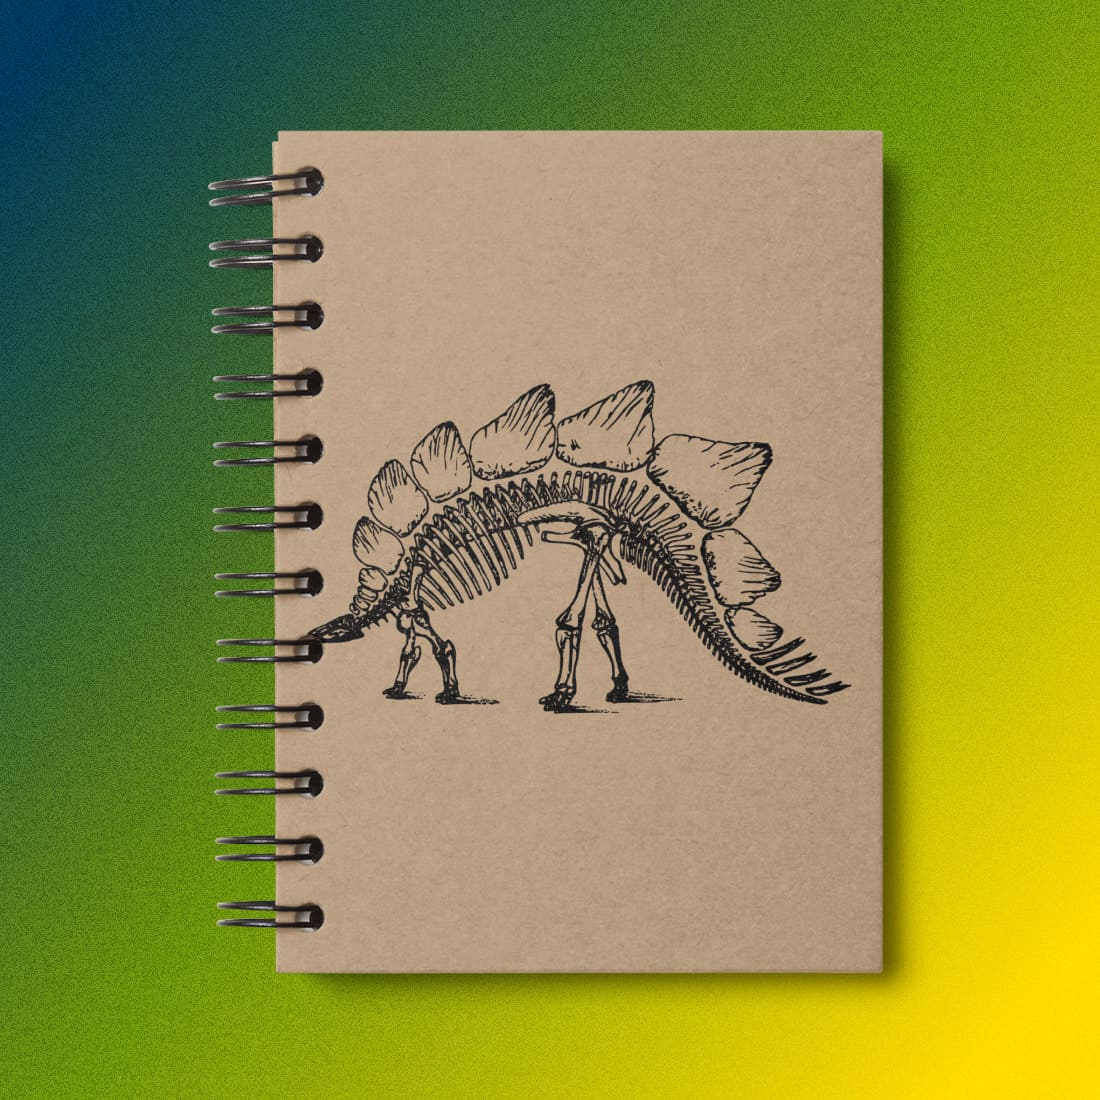 Dinosaur Stegosaurus Skeleton Bone on Notebook.